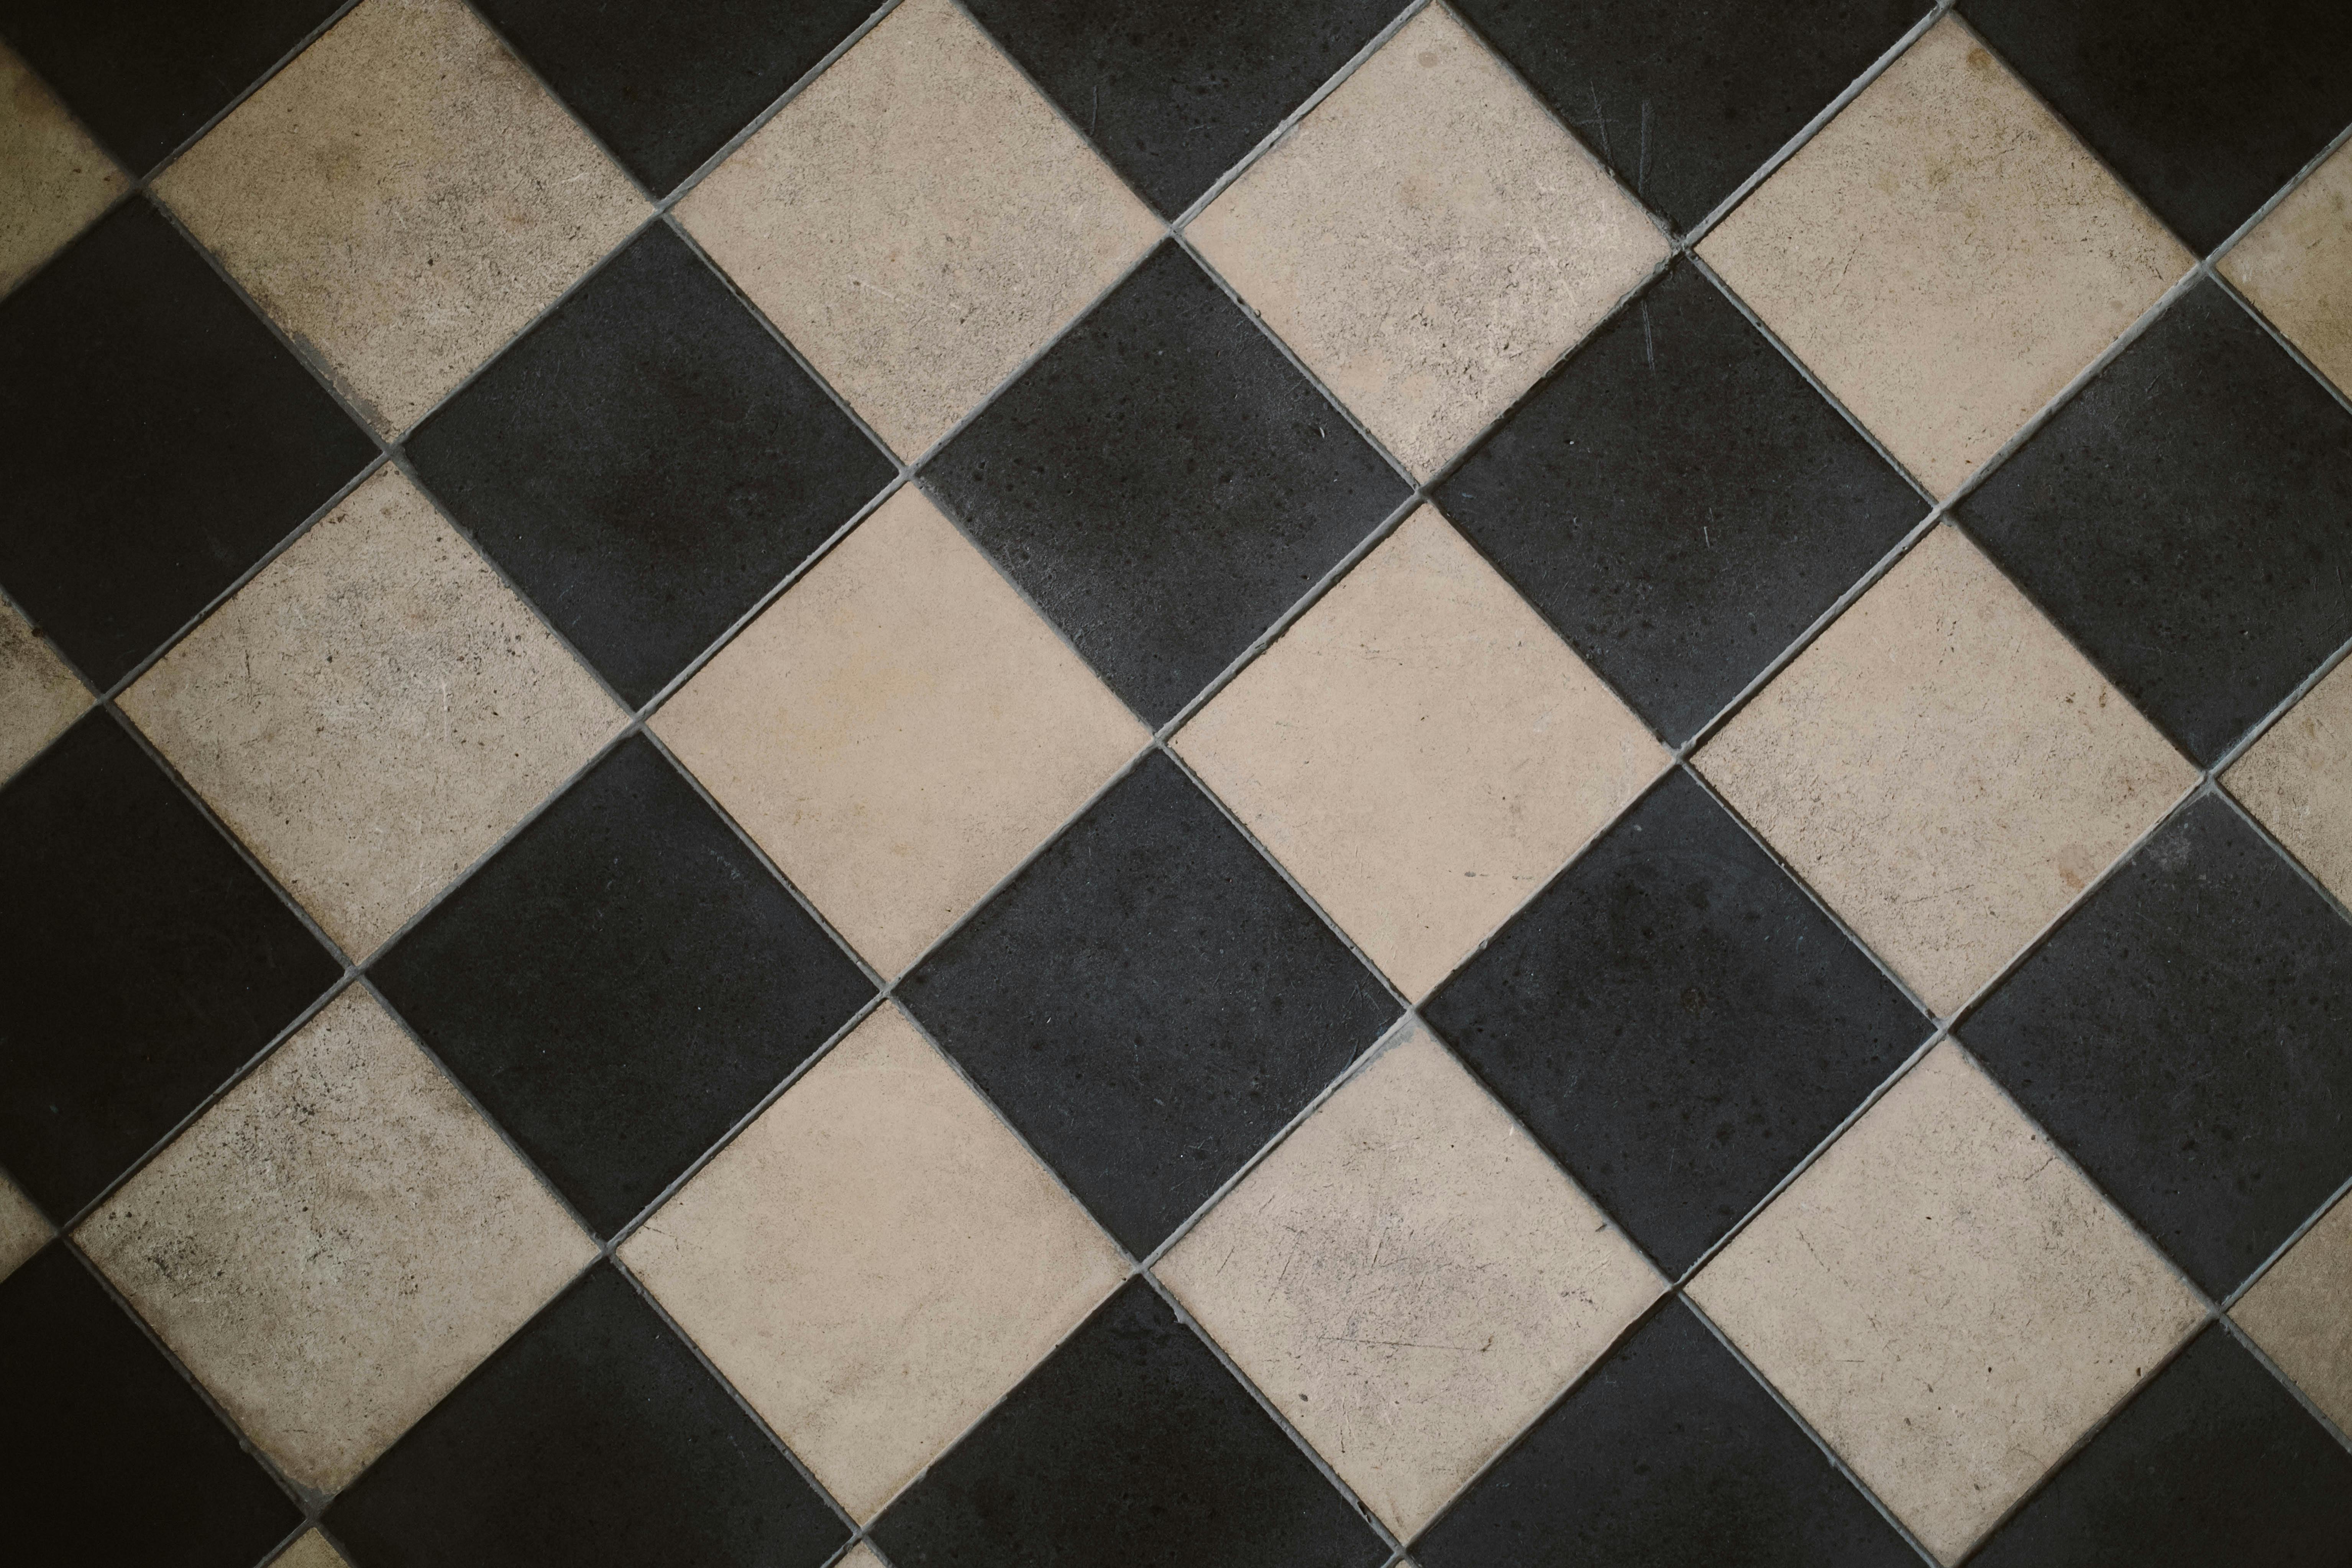 Black and White Checkered Tiles \u00b7 Free Stock Photo